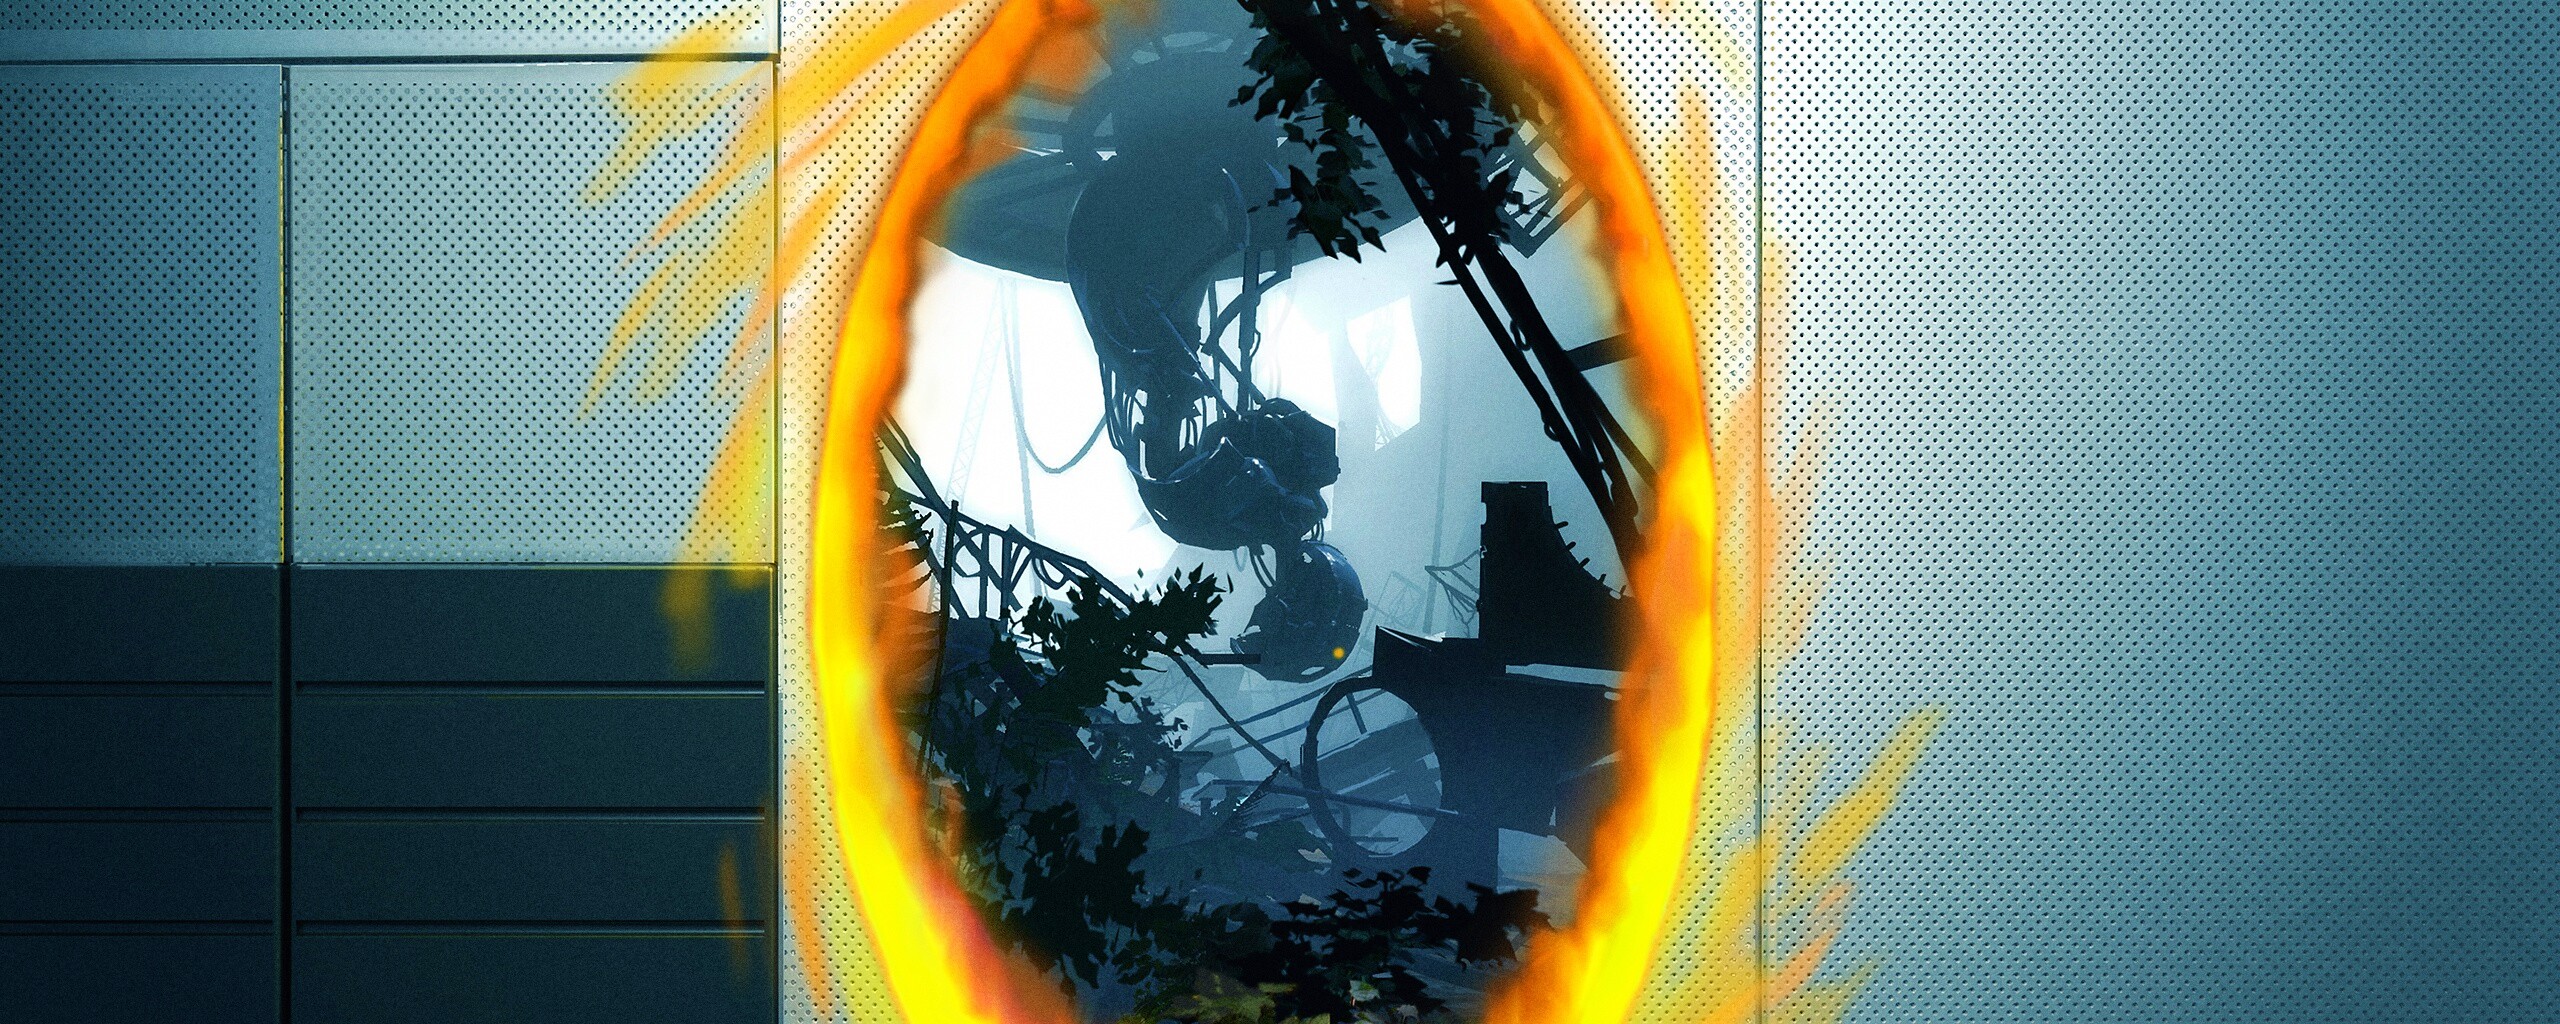 Portal 2 split screen on pc фото 19